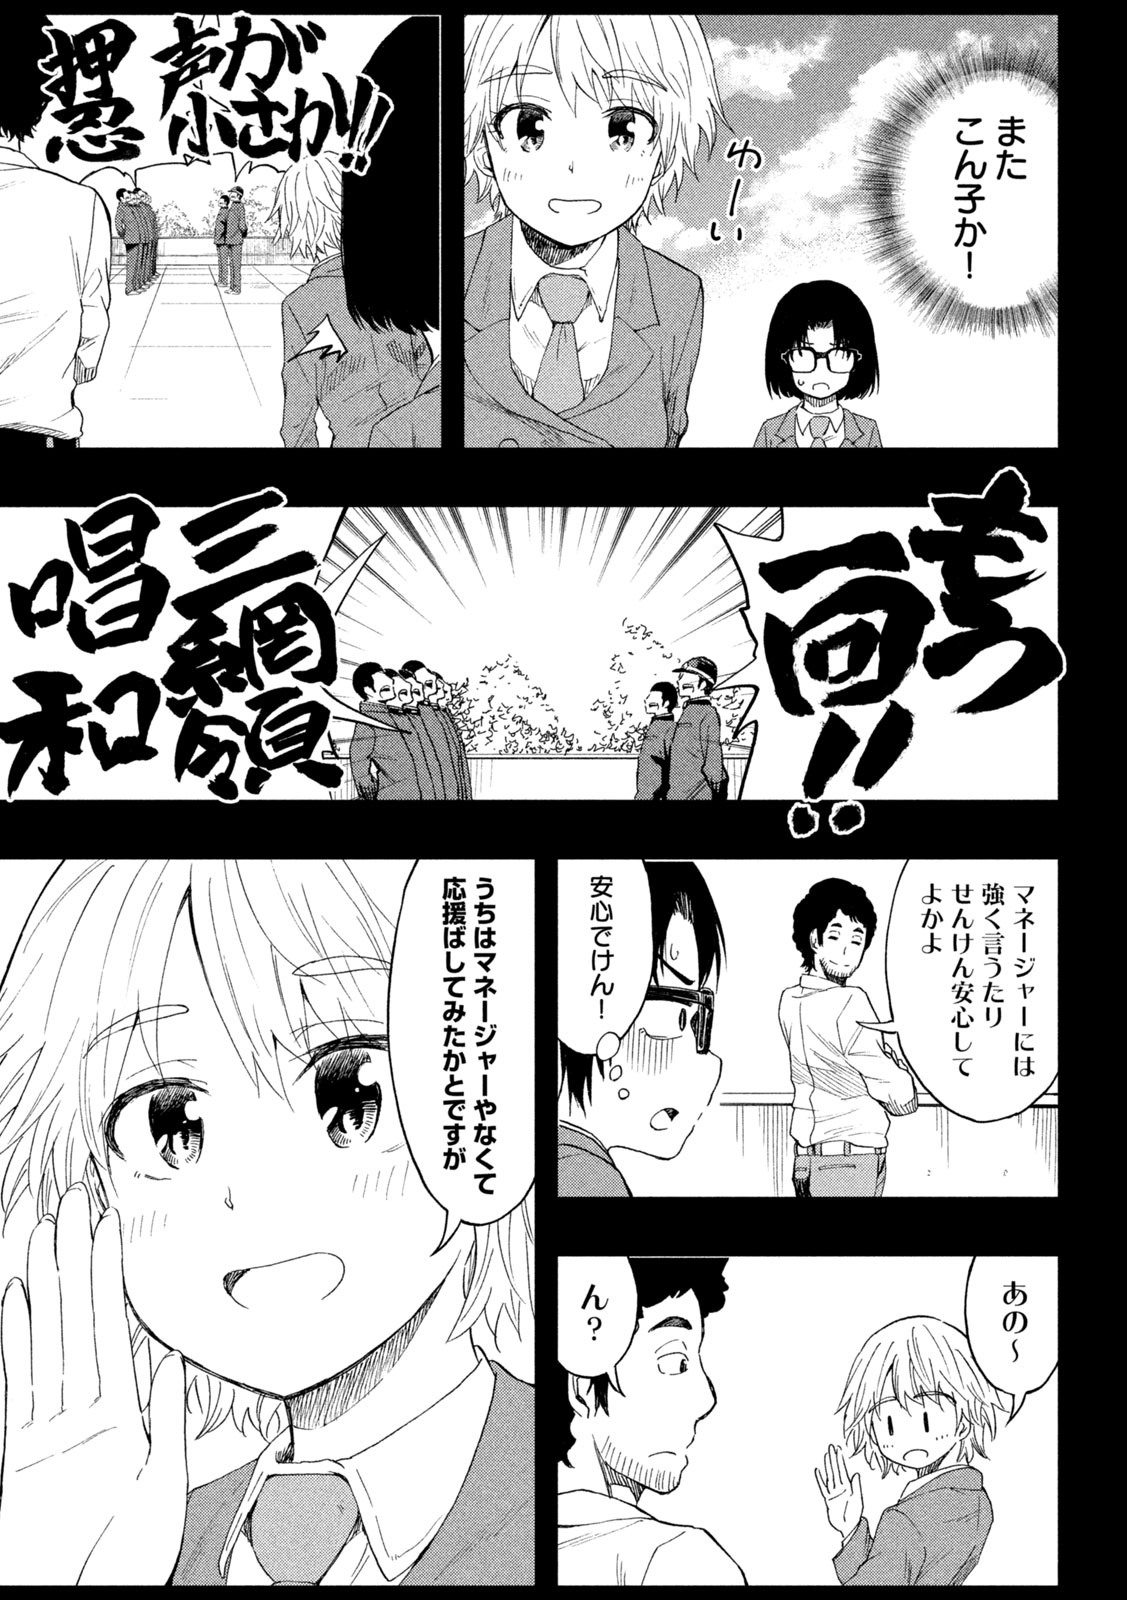 Koharu haru! - Chapter 59 - Page 3